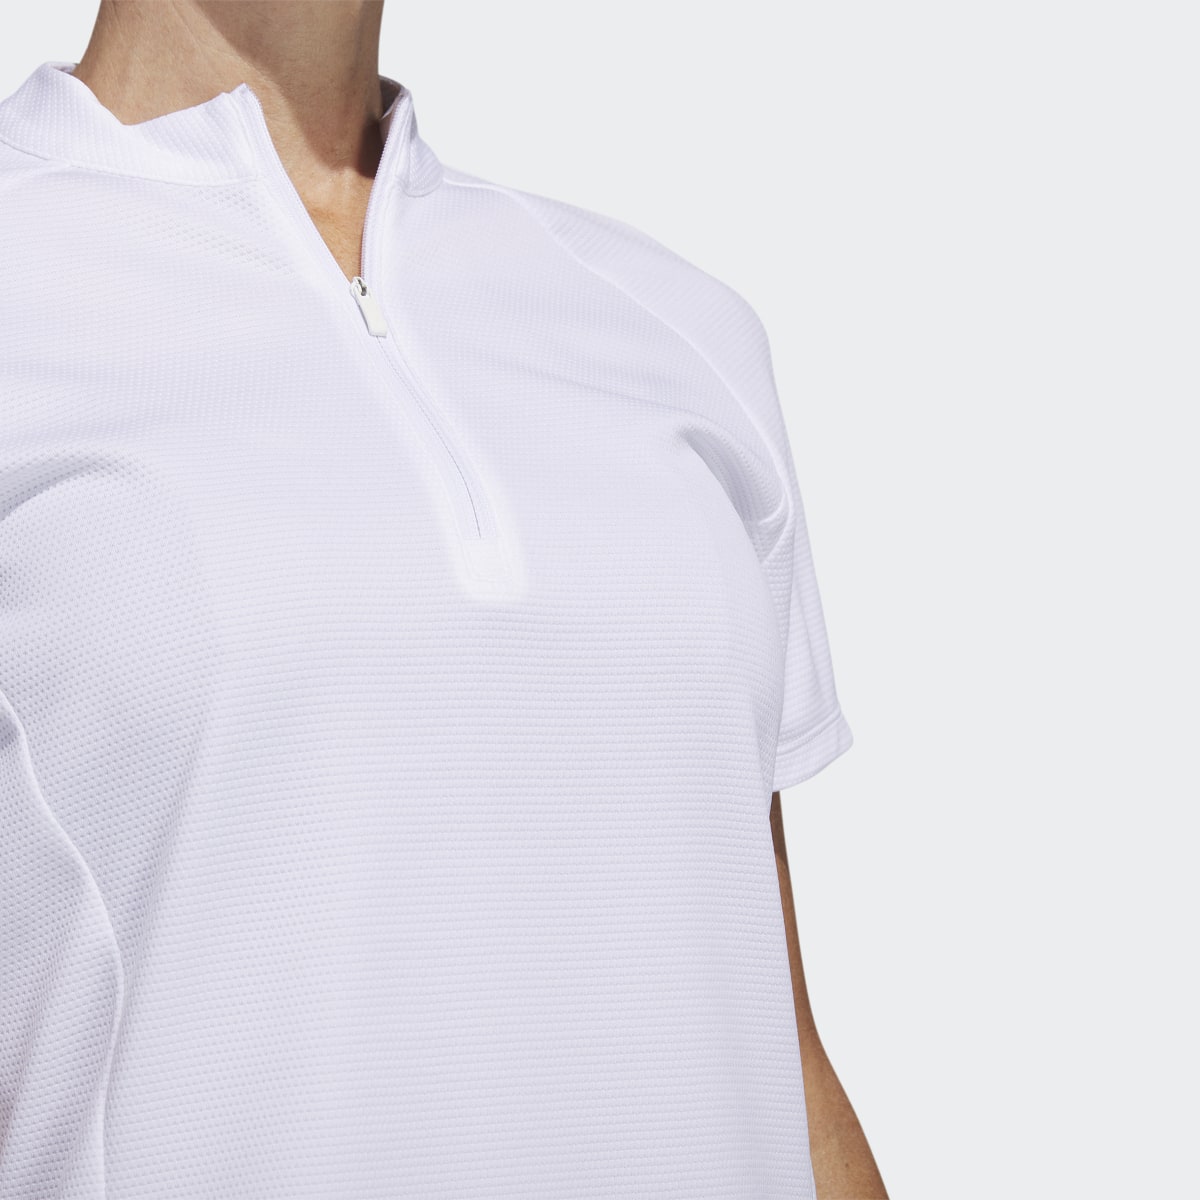 Adidas Textured Golf Poloshirt. 6